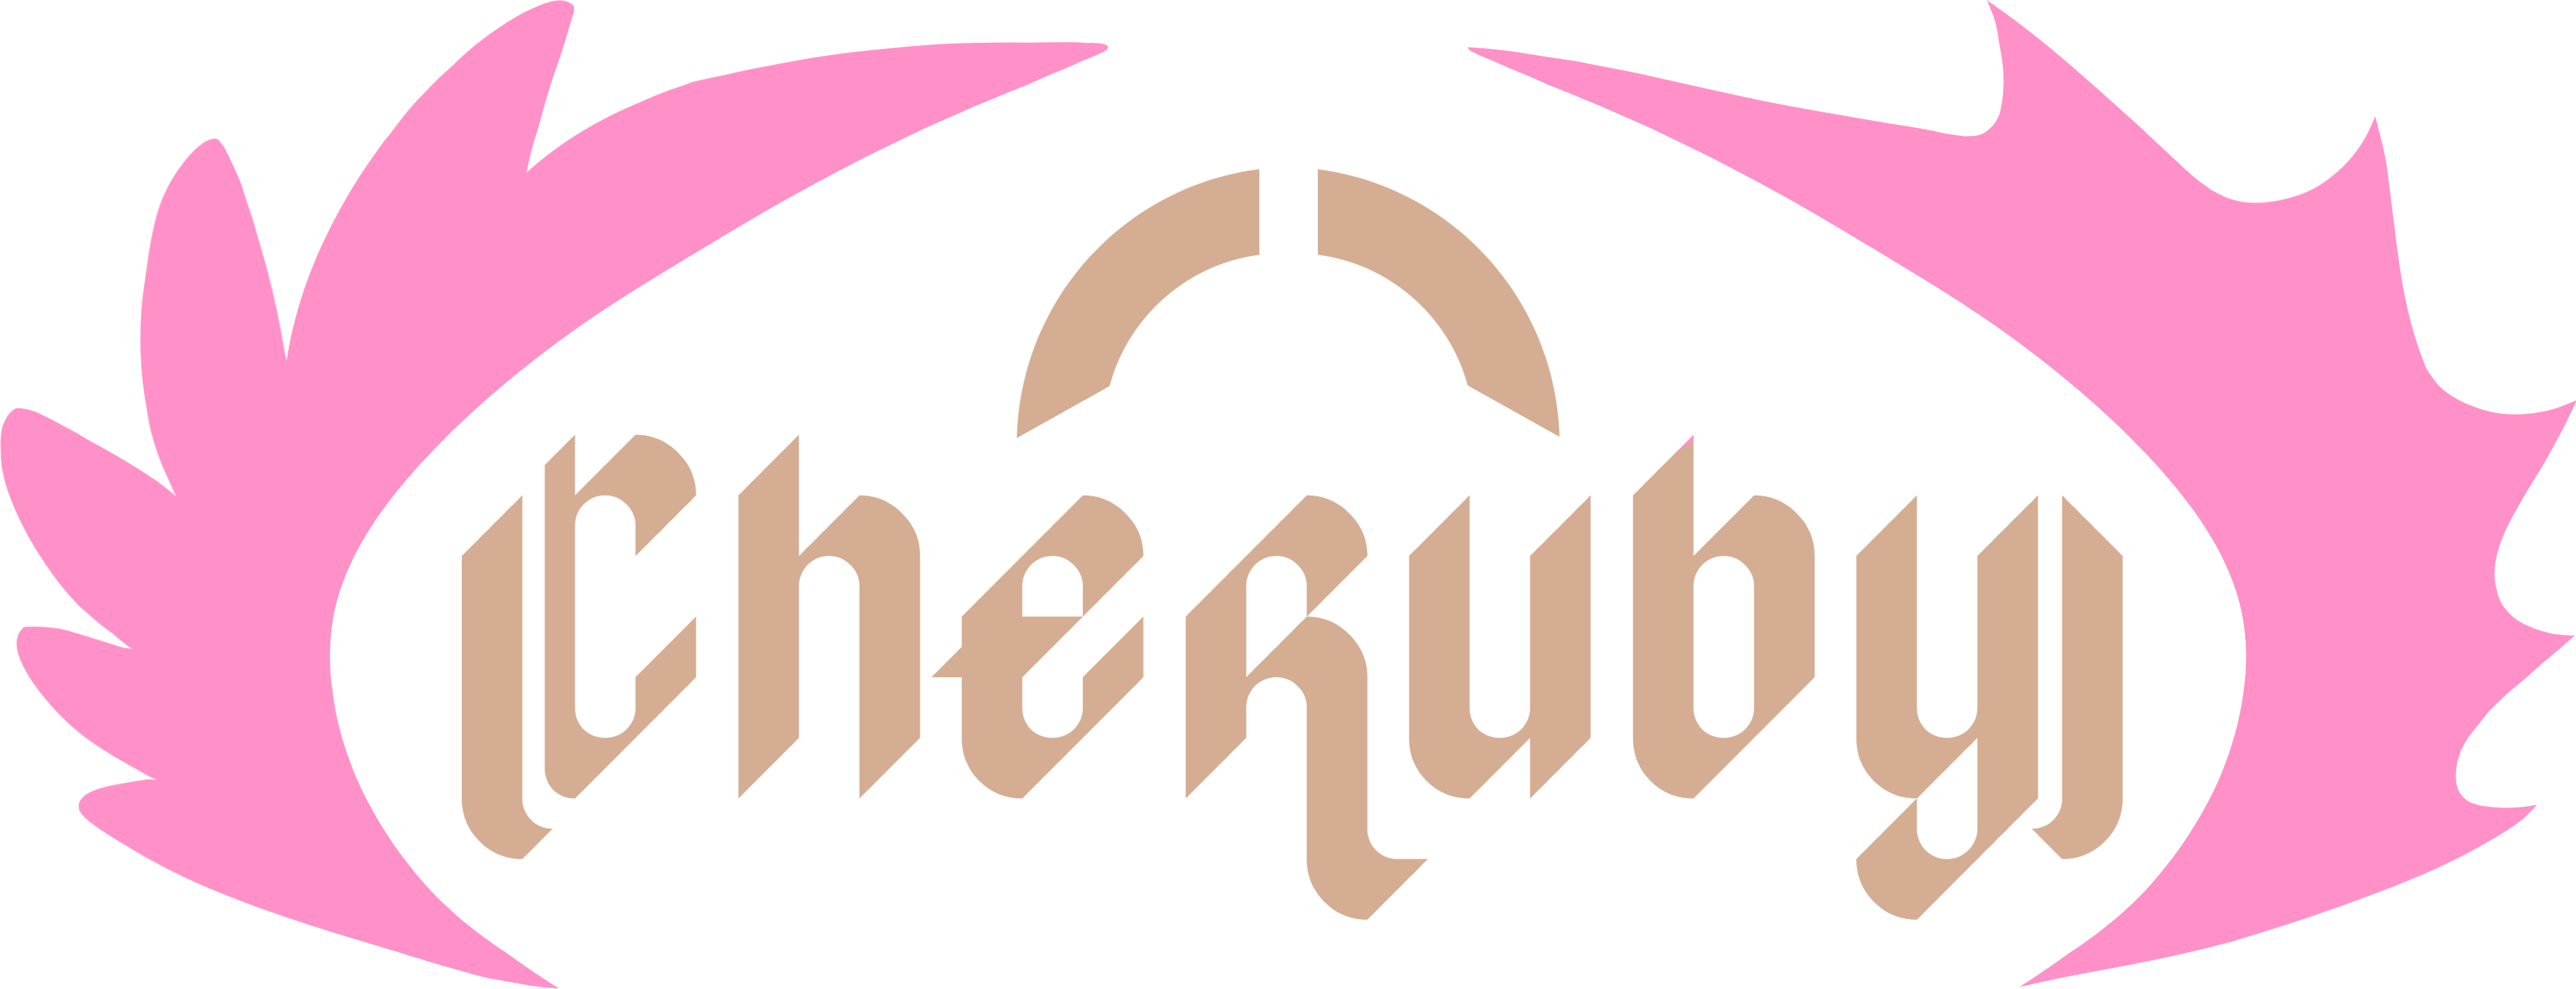 220805_CHERUBY_Logo.png